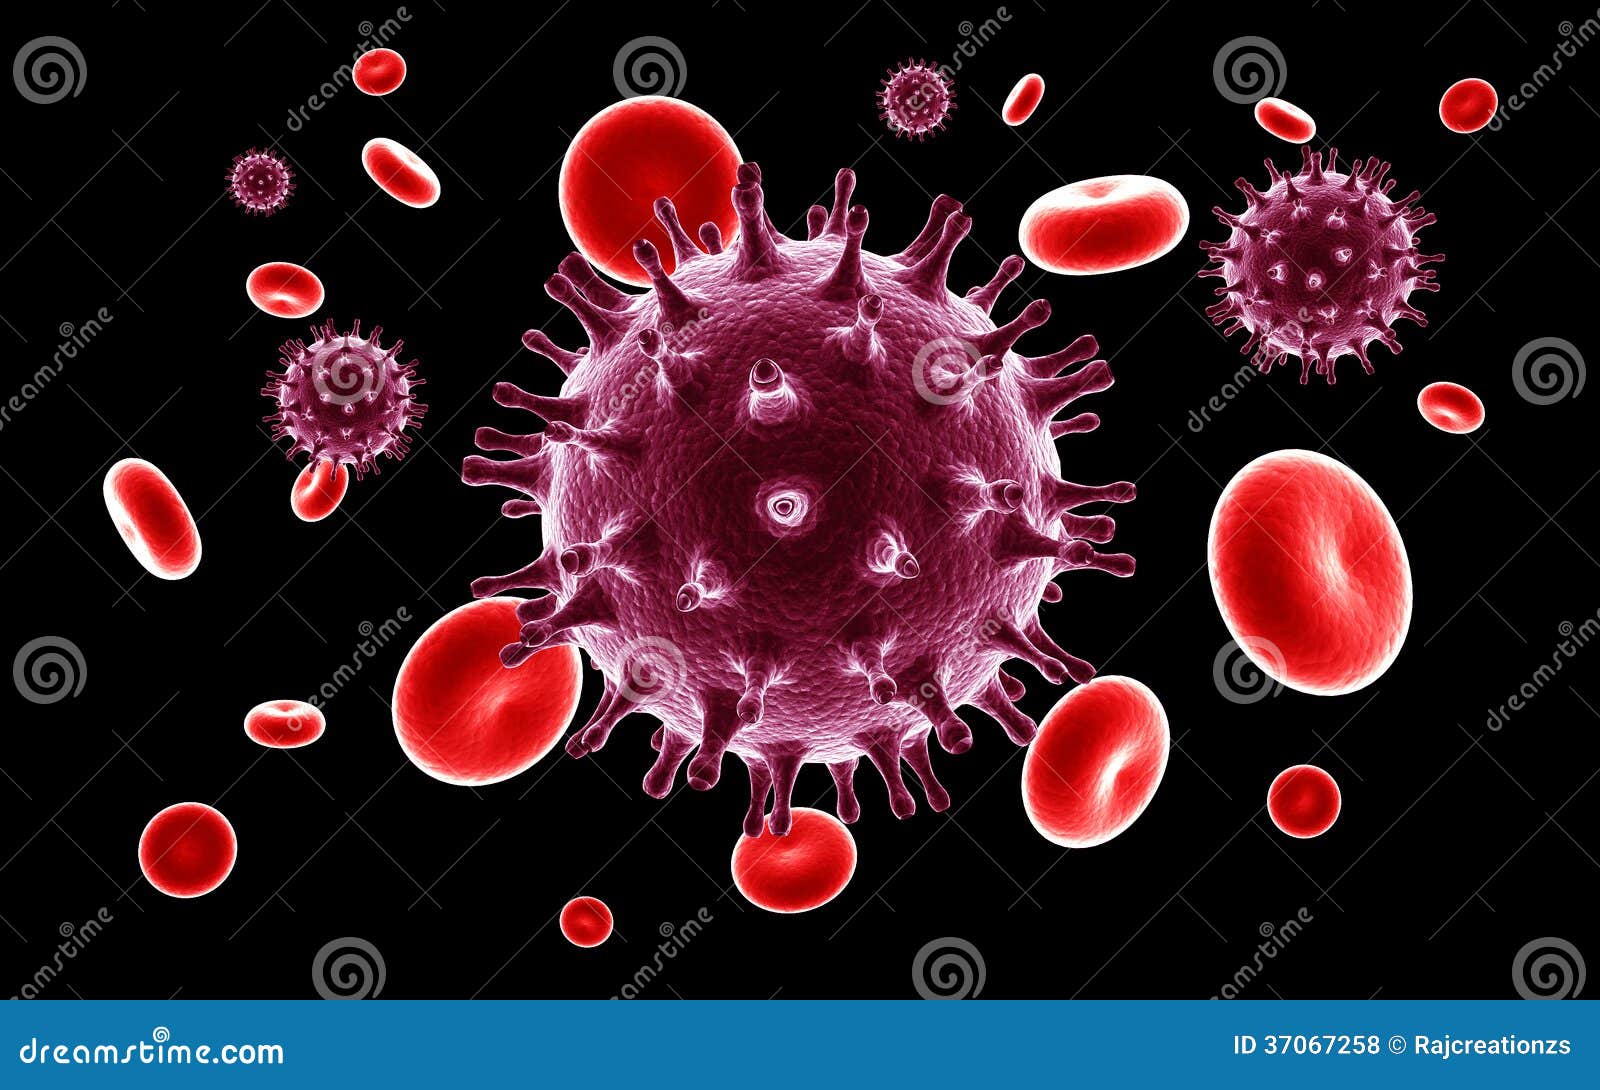 hiv virus blood stream isolated white background 37067258